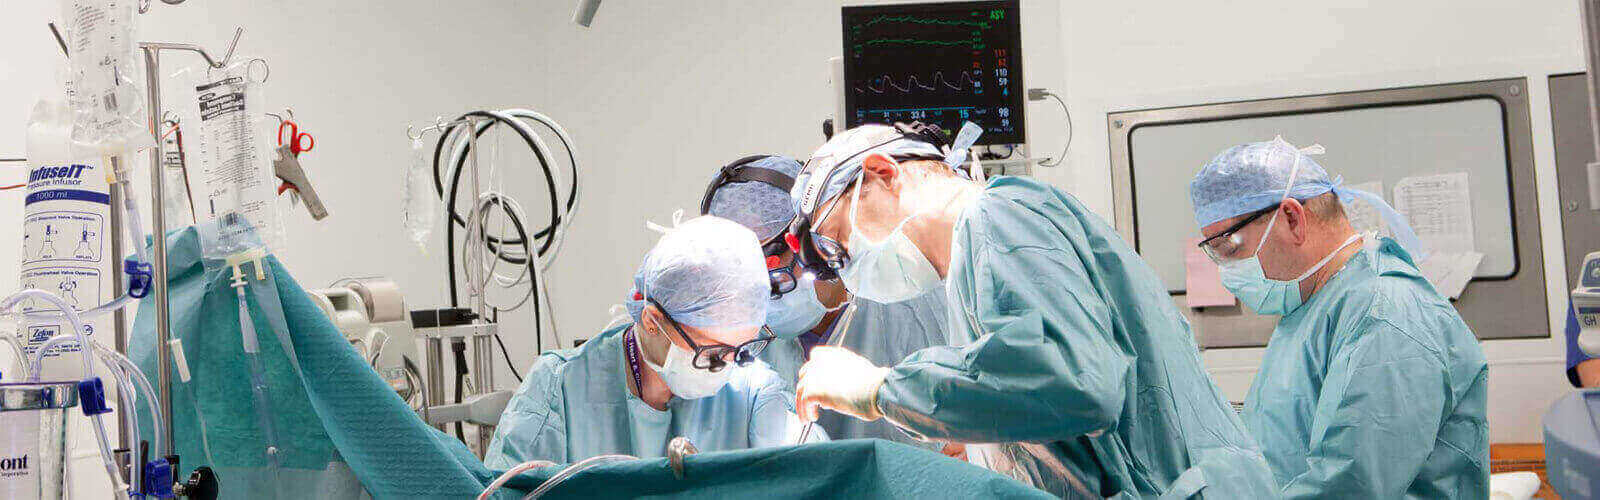 Heart Surgery Or Cardiac Surgery in El Salvador